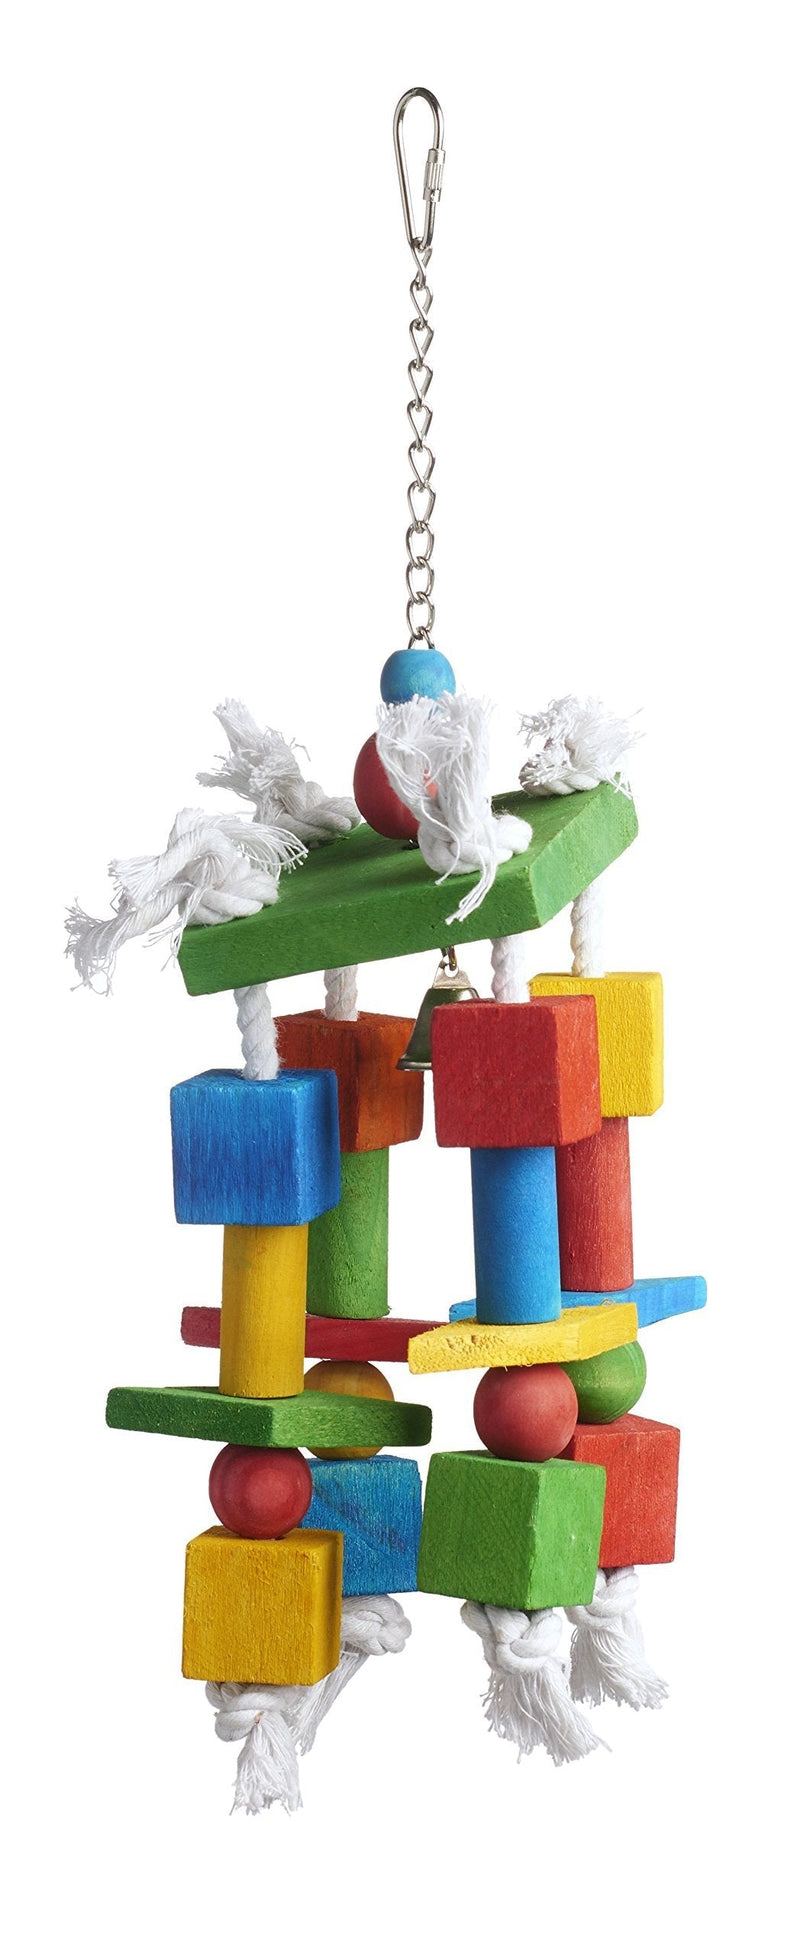 [Australia] - Prevue Pet Products 60955 Bodacious Bites Crazy Legs Bird Toy, Multicolor 